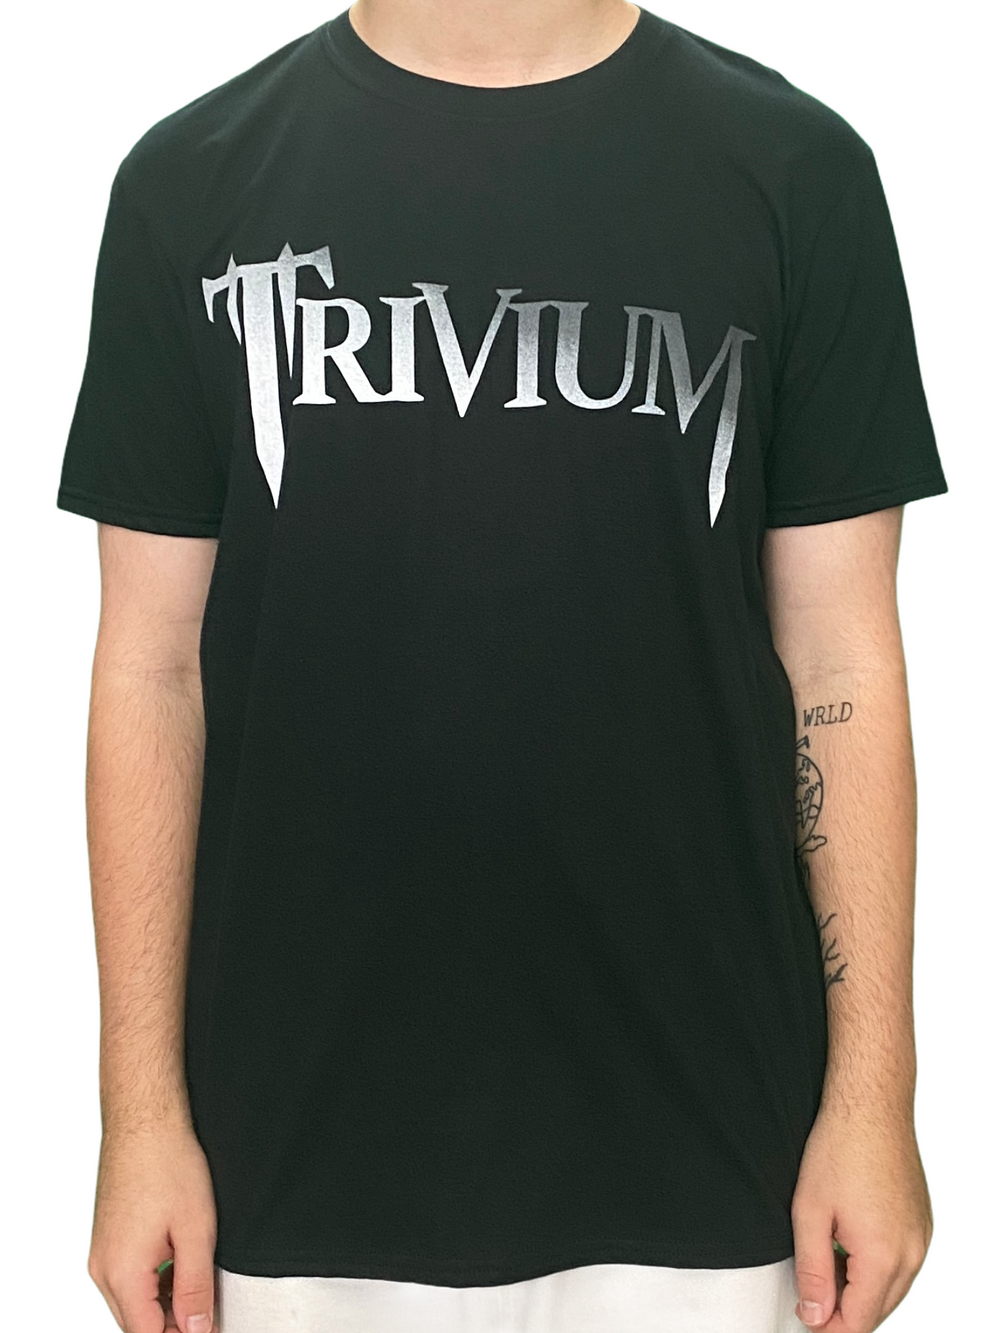 Trivium Logo Unisex Official T Shirt Brand New Various Sizes